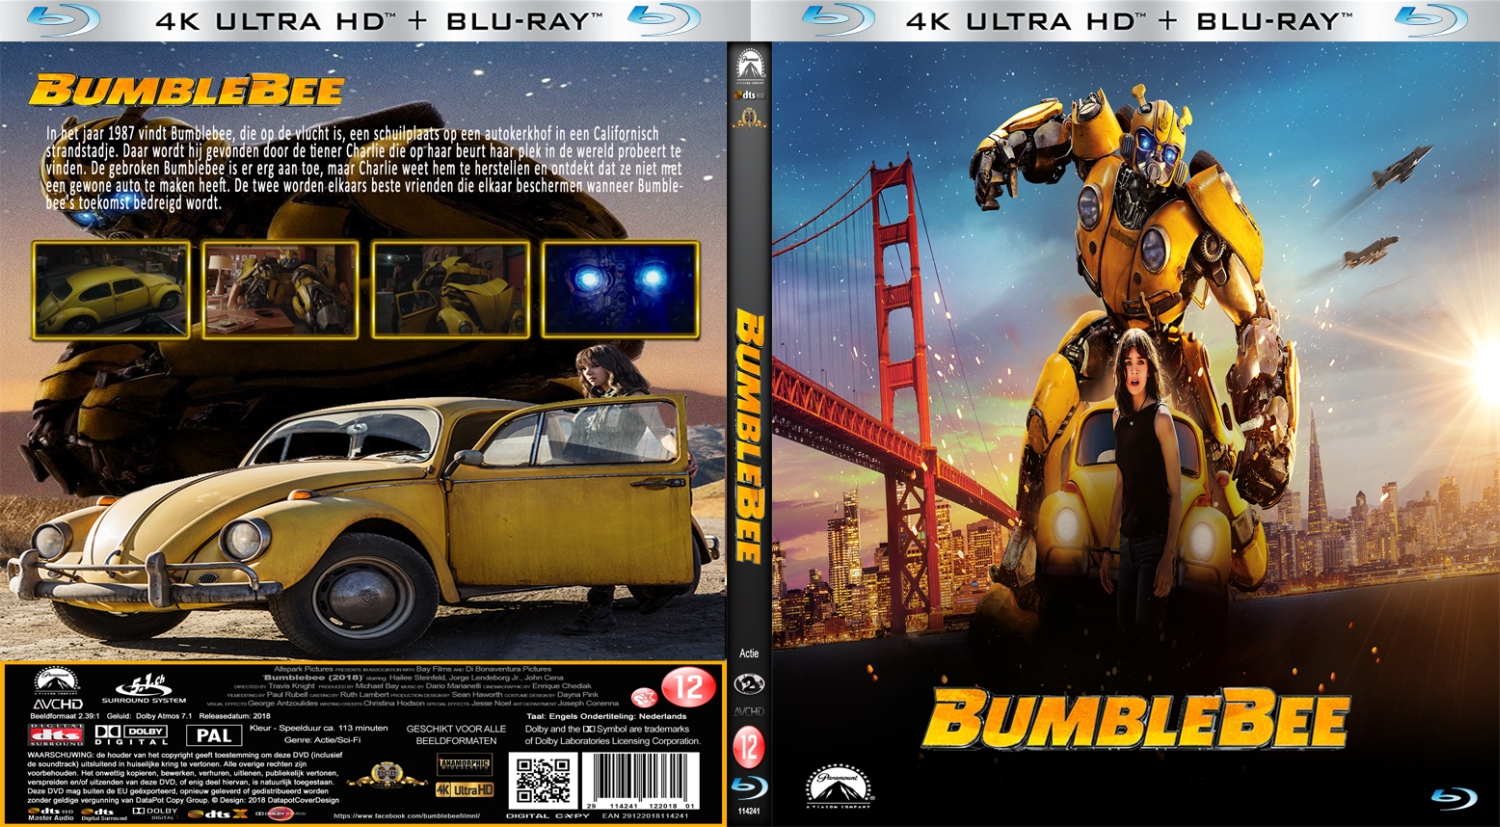 Bumblebee [DVD] [2018]